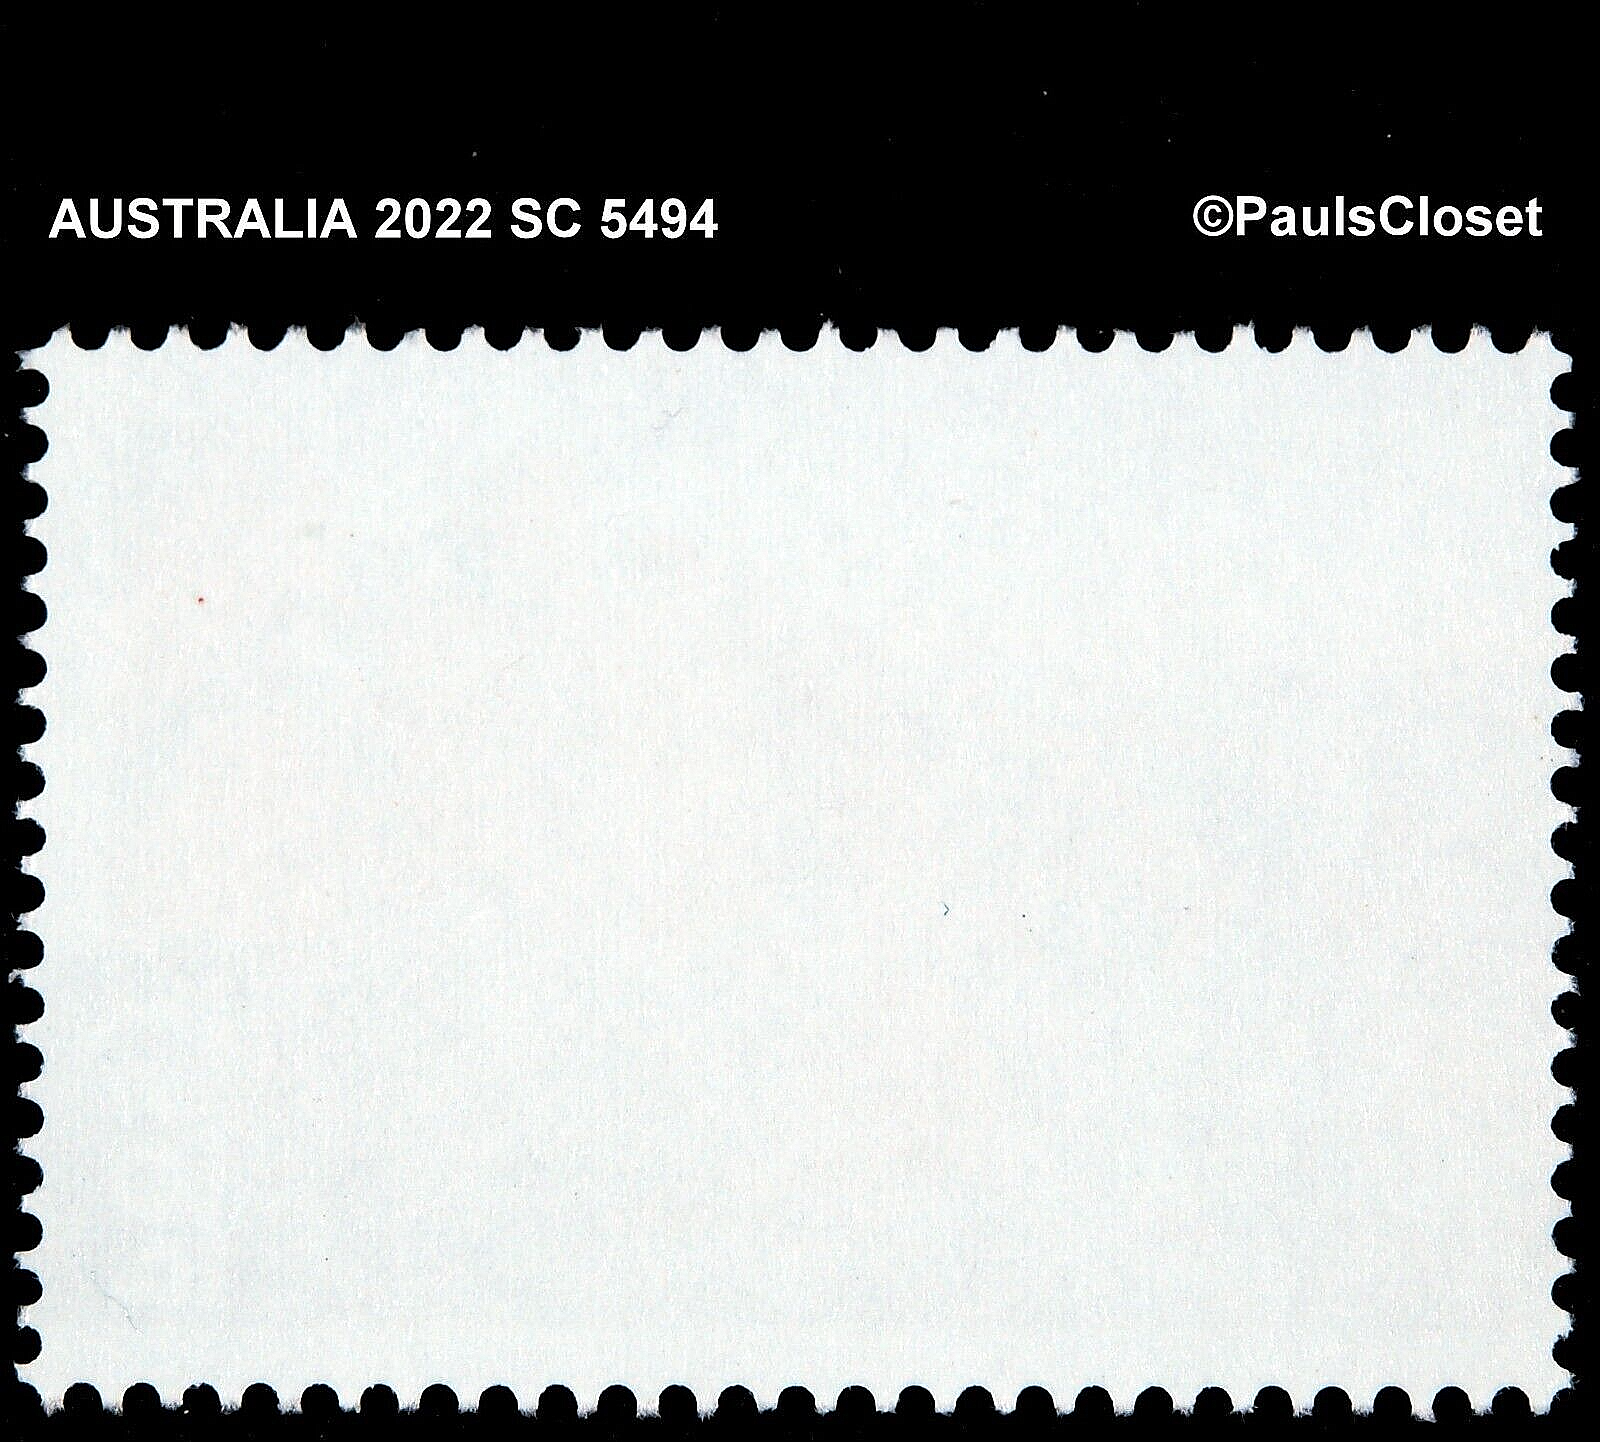 AUSTRALIA 2022 SC 5492-95 AERIAL VIEWS $2.90, $3.50, $3.70 & $4.00 MNH OG VFINE Без бренда - фотография #7